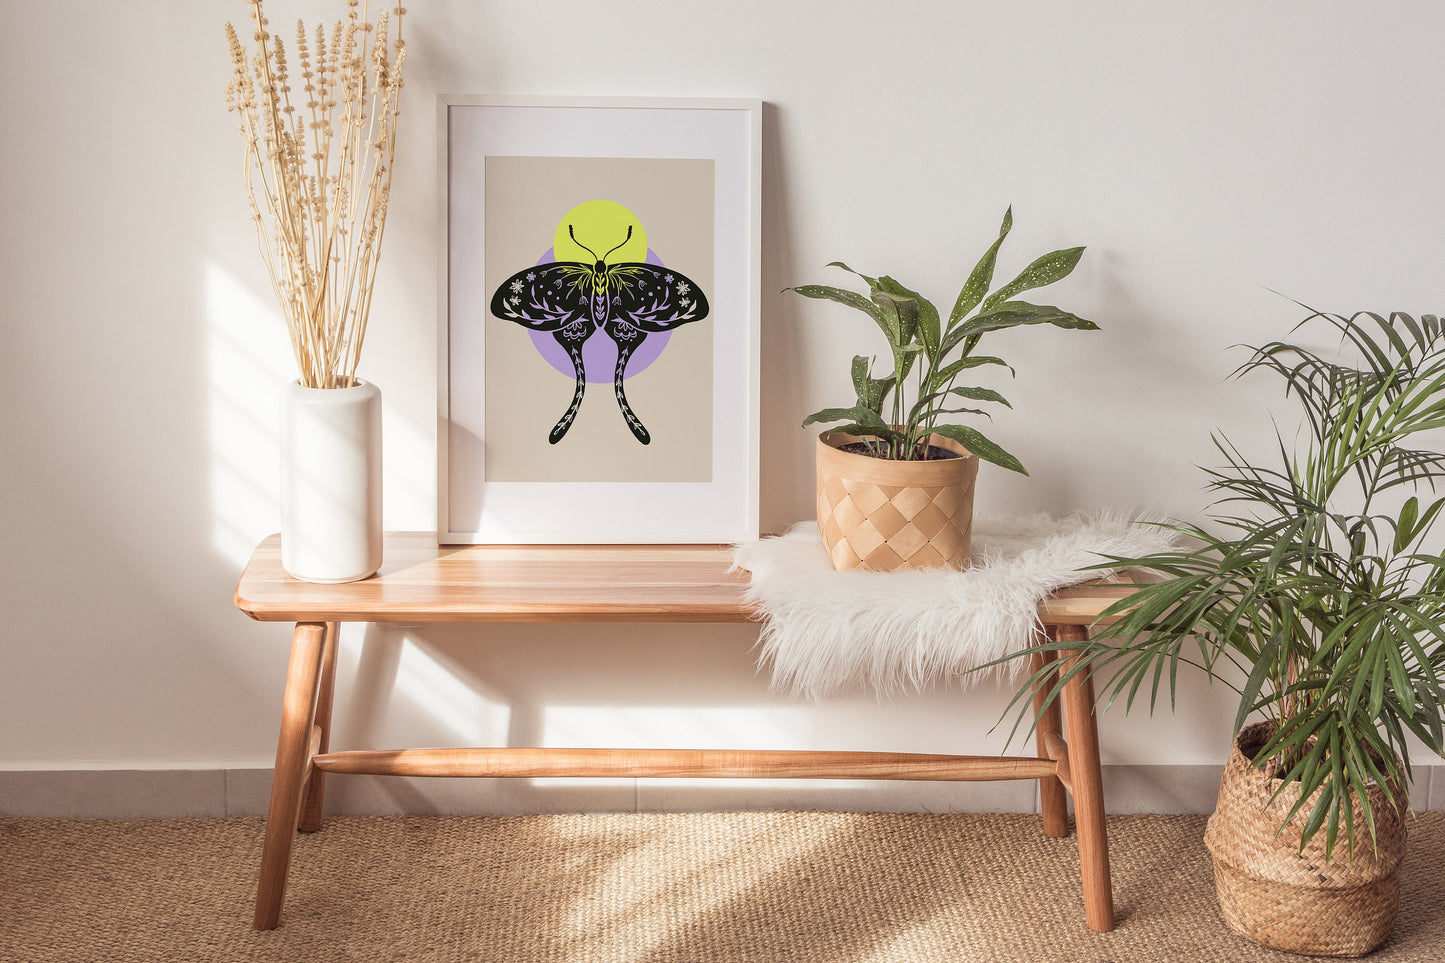 Neon Moth Digital Art Print